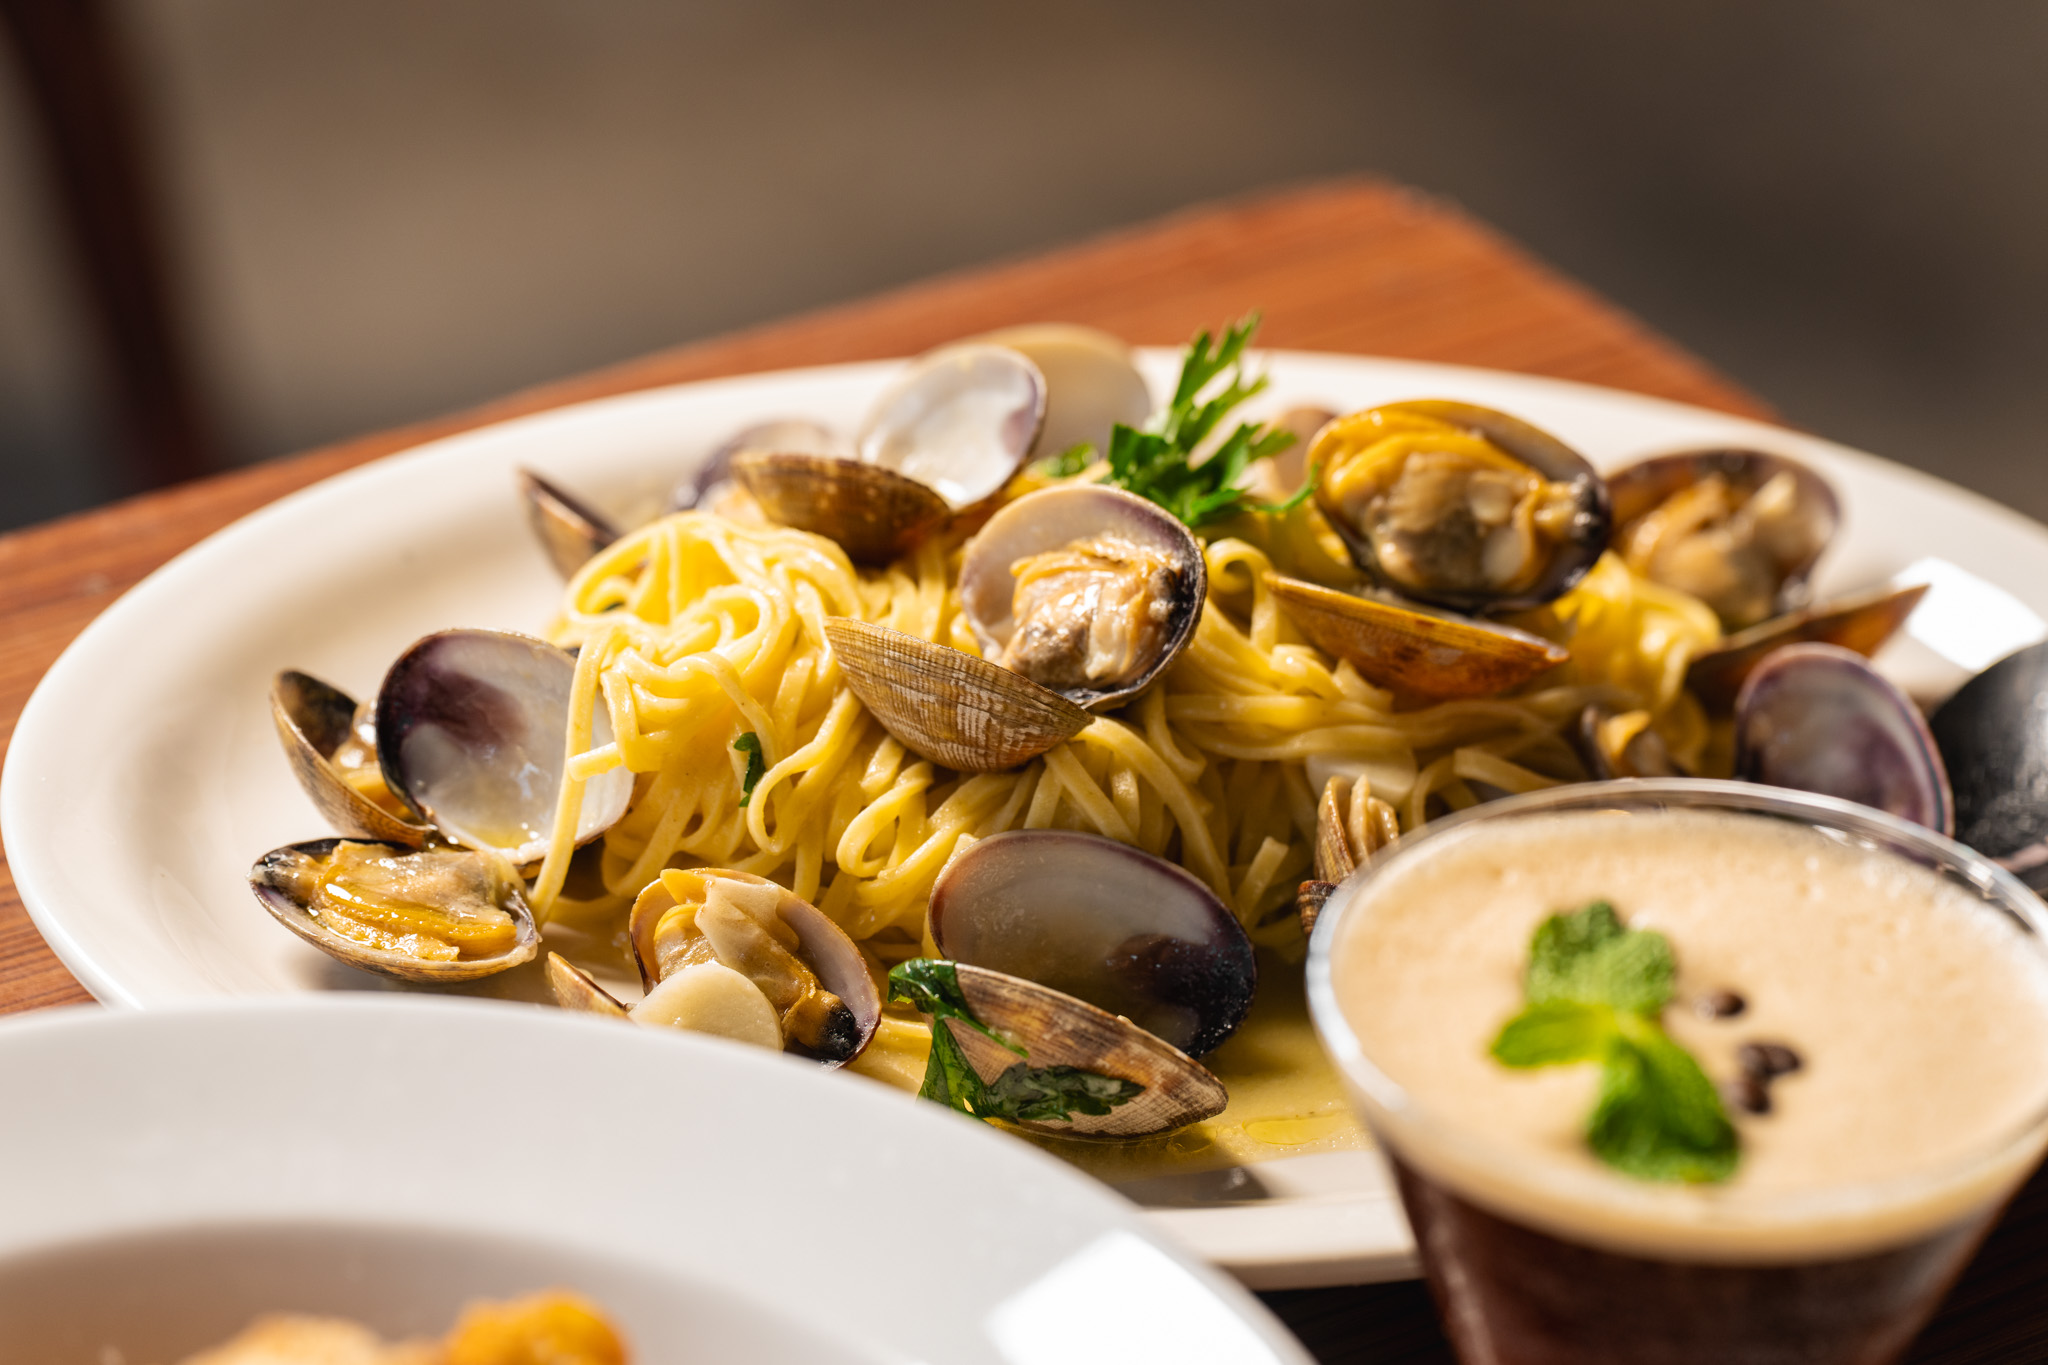 Seafood pasta with espresso martini